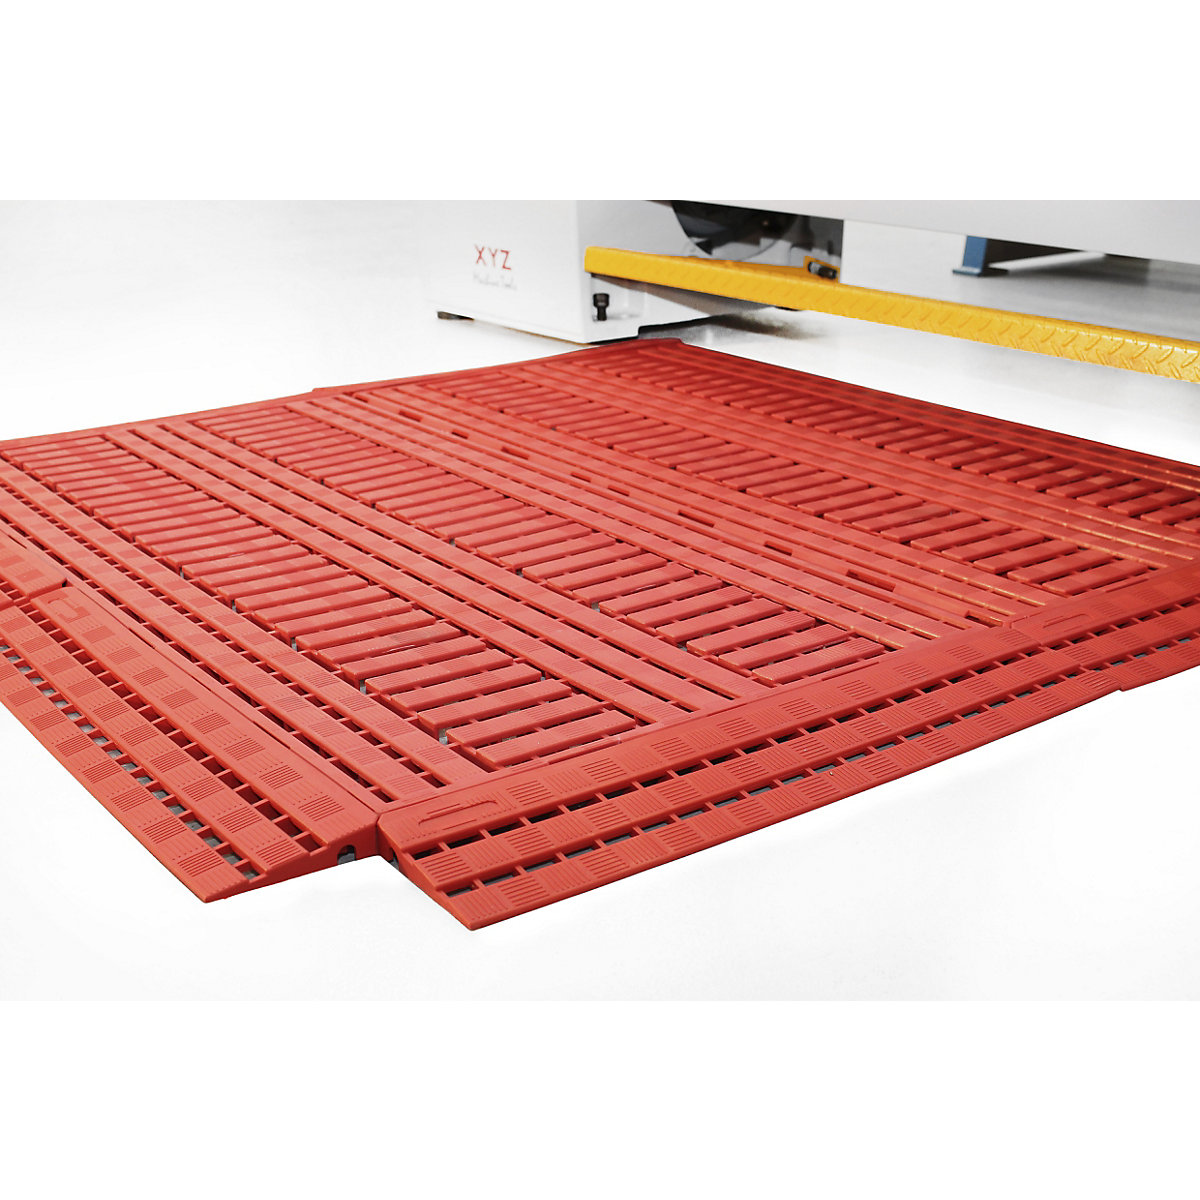 Plastic floor tile, polyethylene, LxW 1200 x 600 mm, pack of 5, red